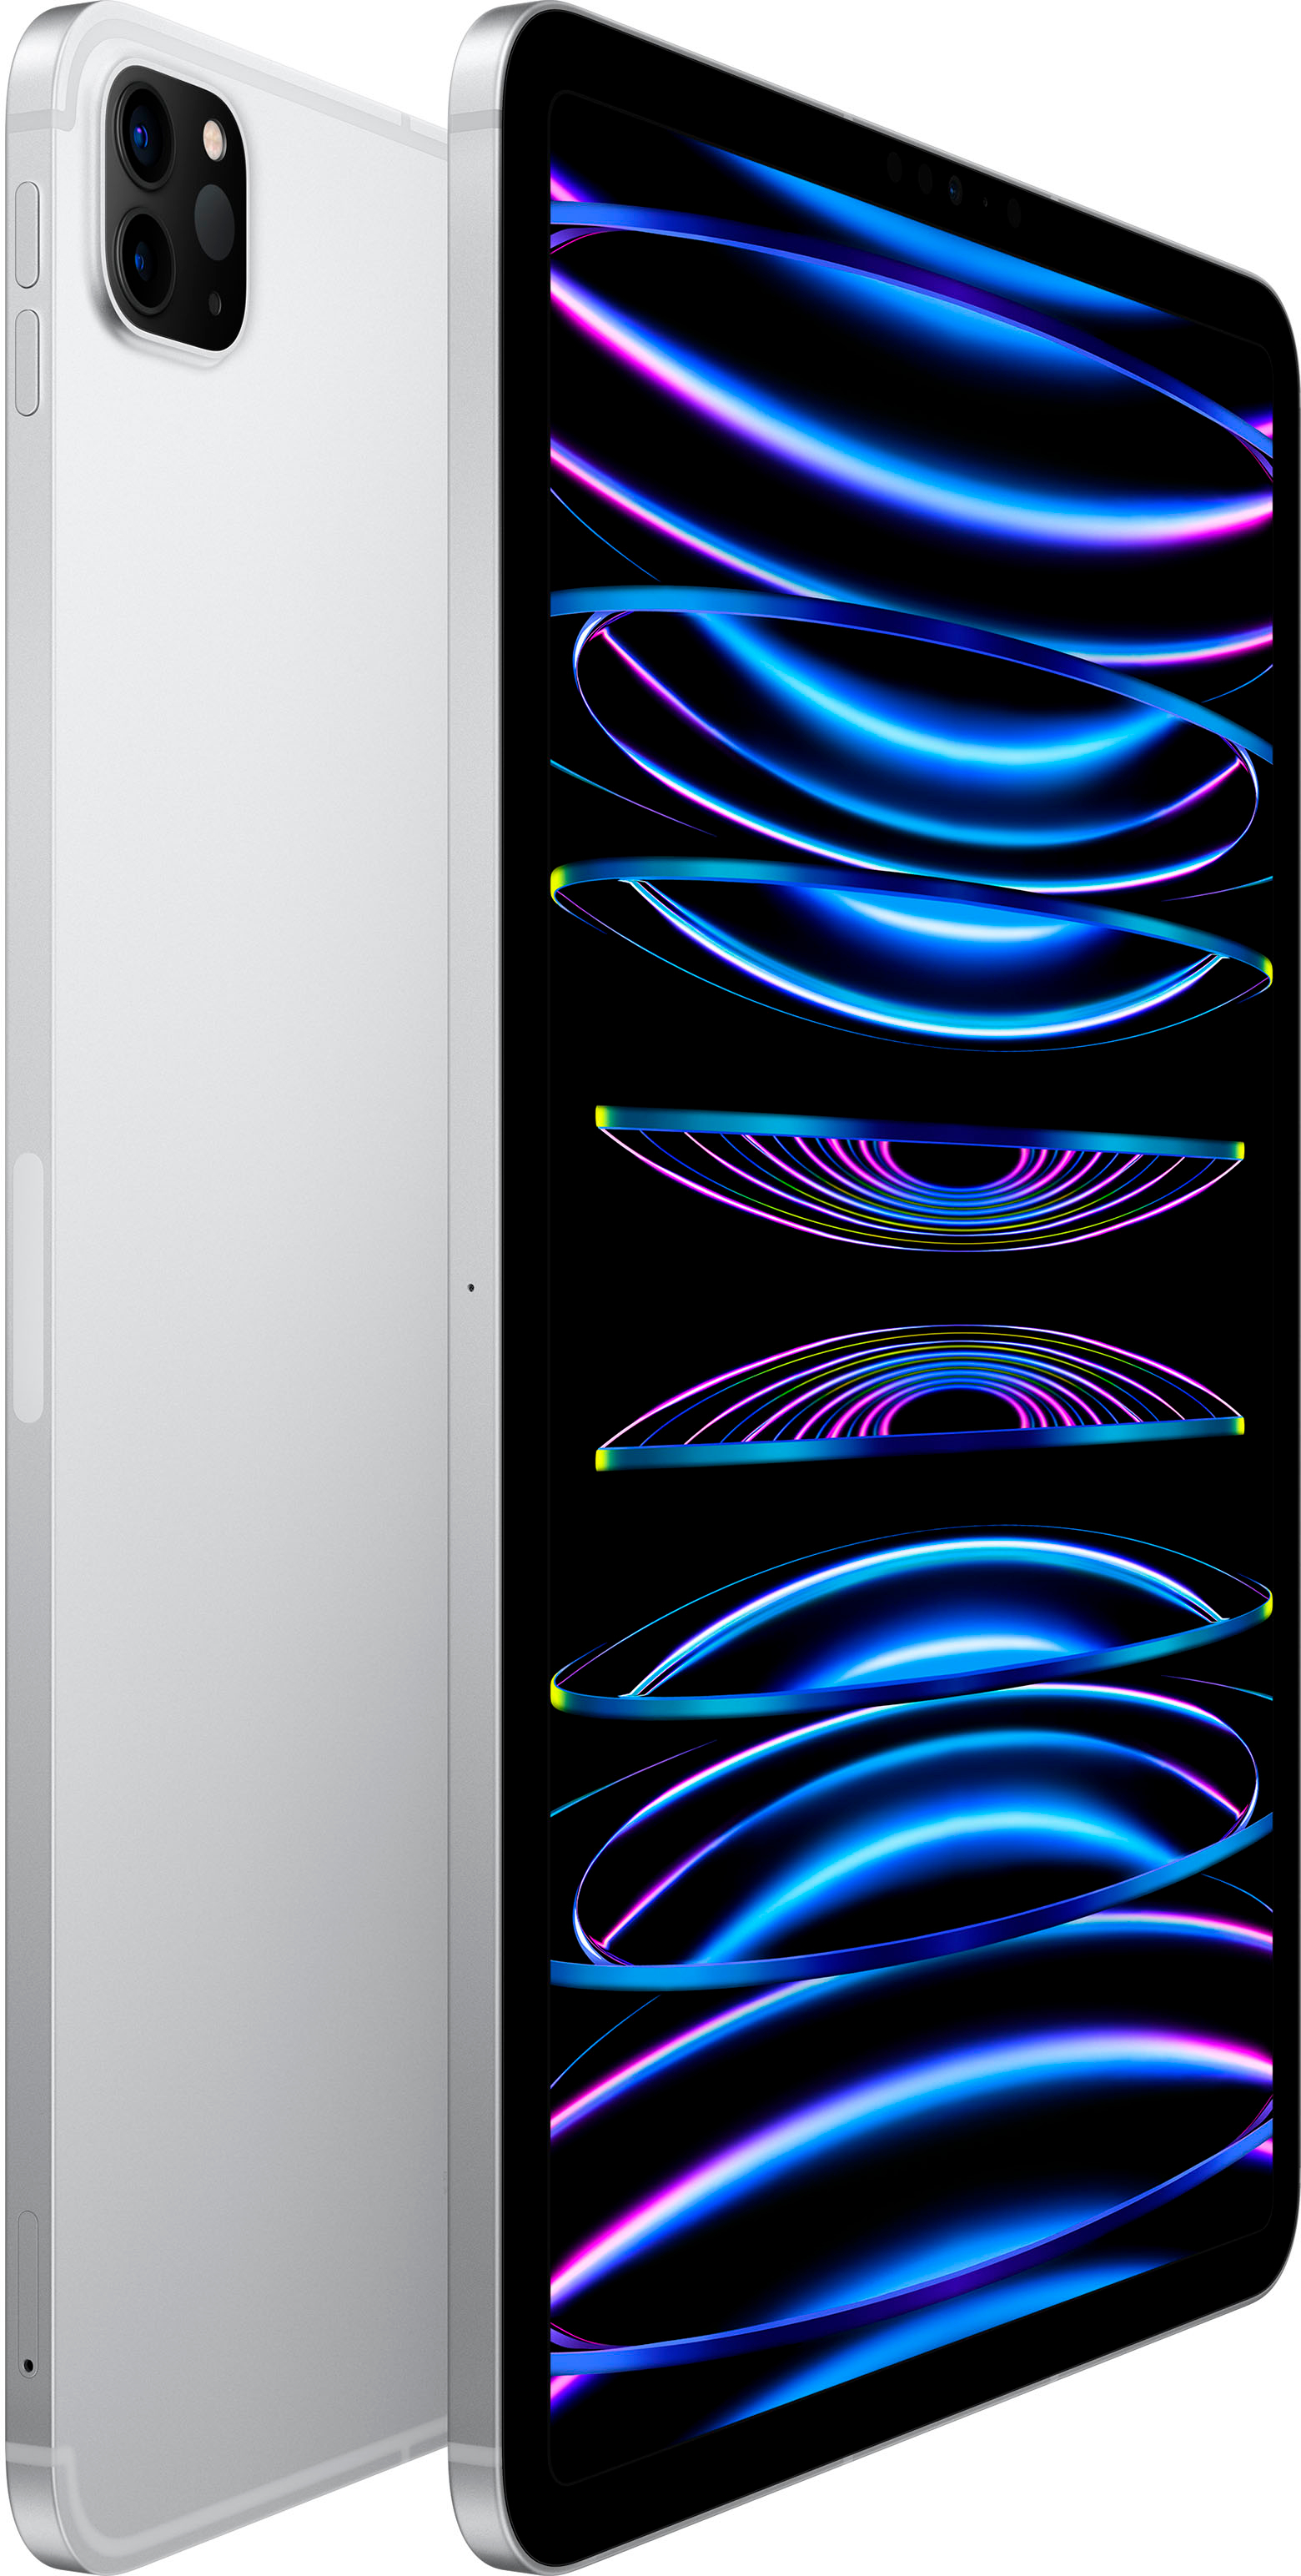 Apple 11-Inch iPad Pro (Latest Model) with Wi-Fi 512GB Silver 